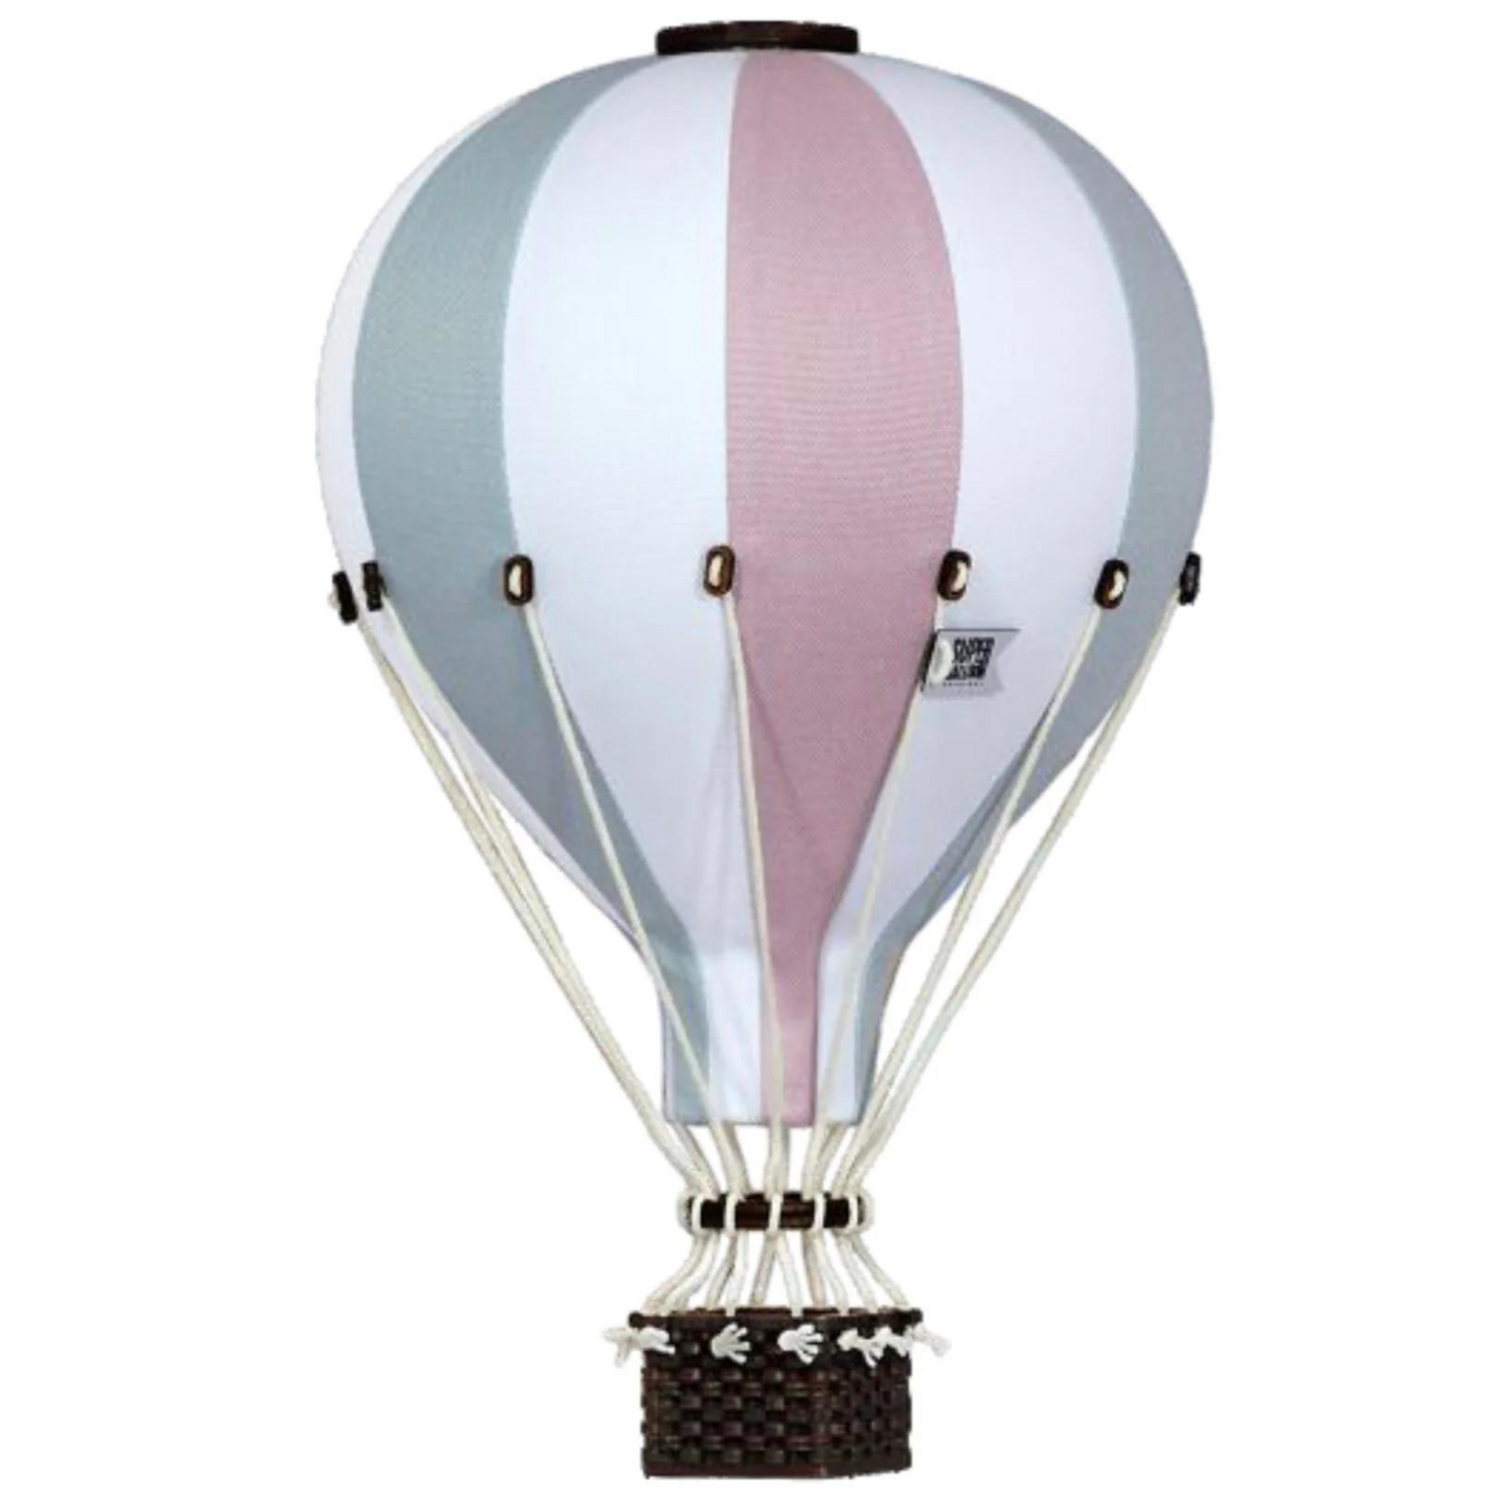 Super Balloon air balloon - Sage | Blush pink